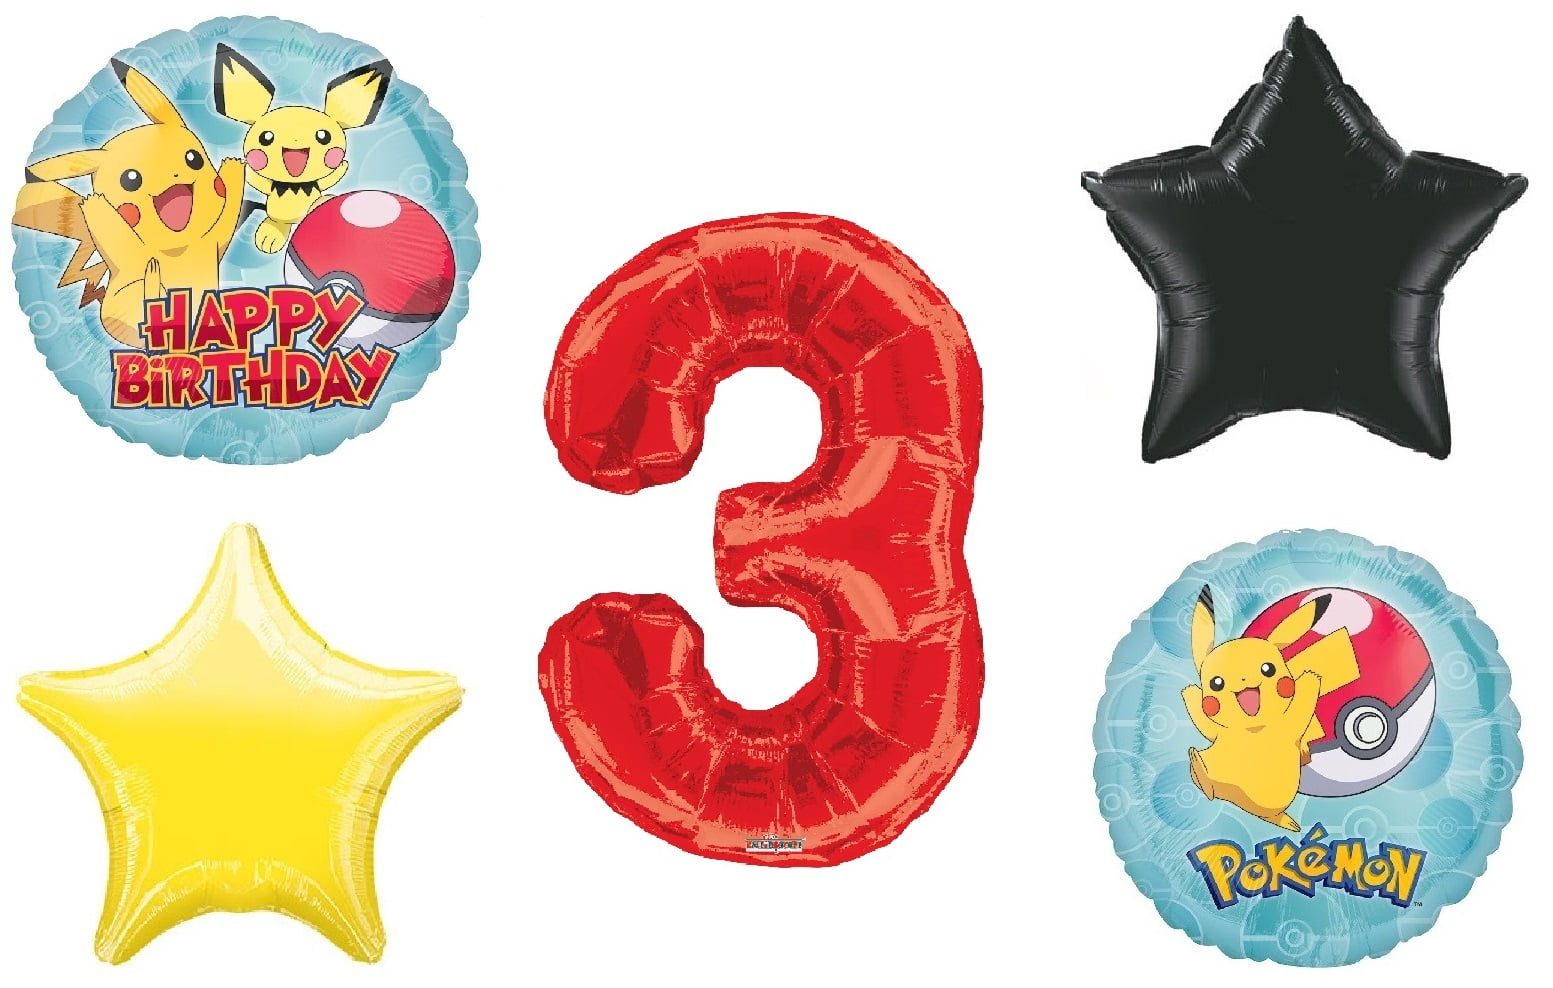 Pokemon GO Pikachu Happy Birthday Balloon Bouquet 3rd Birthday 5 pcs - Party Supplies